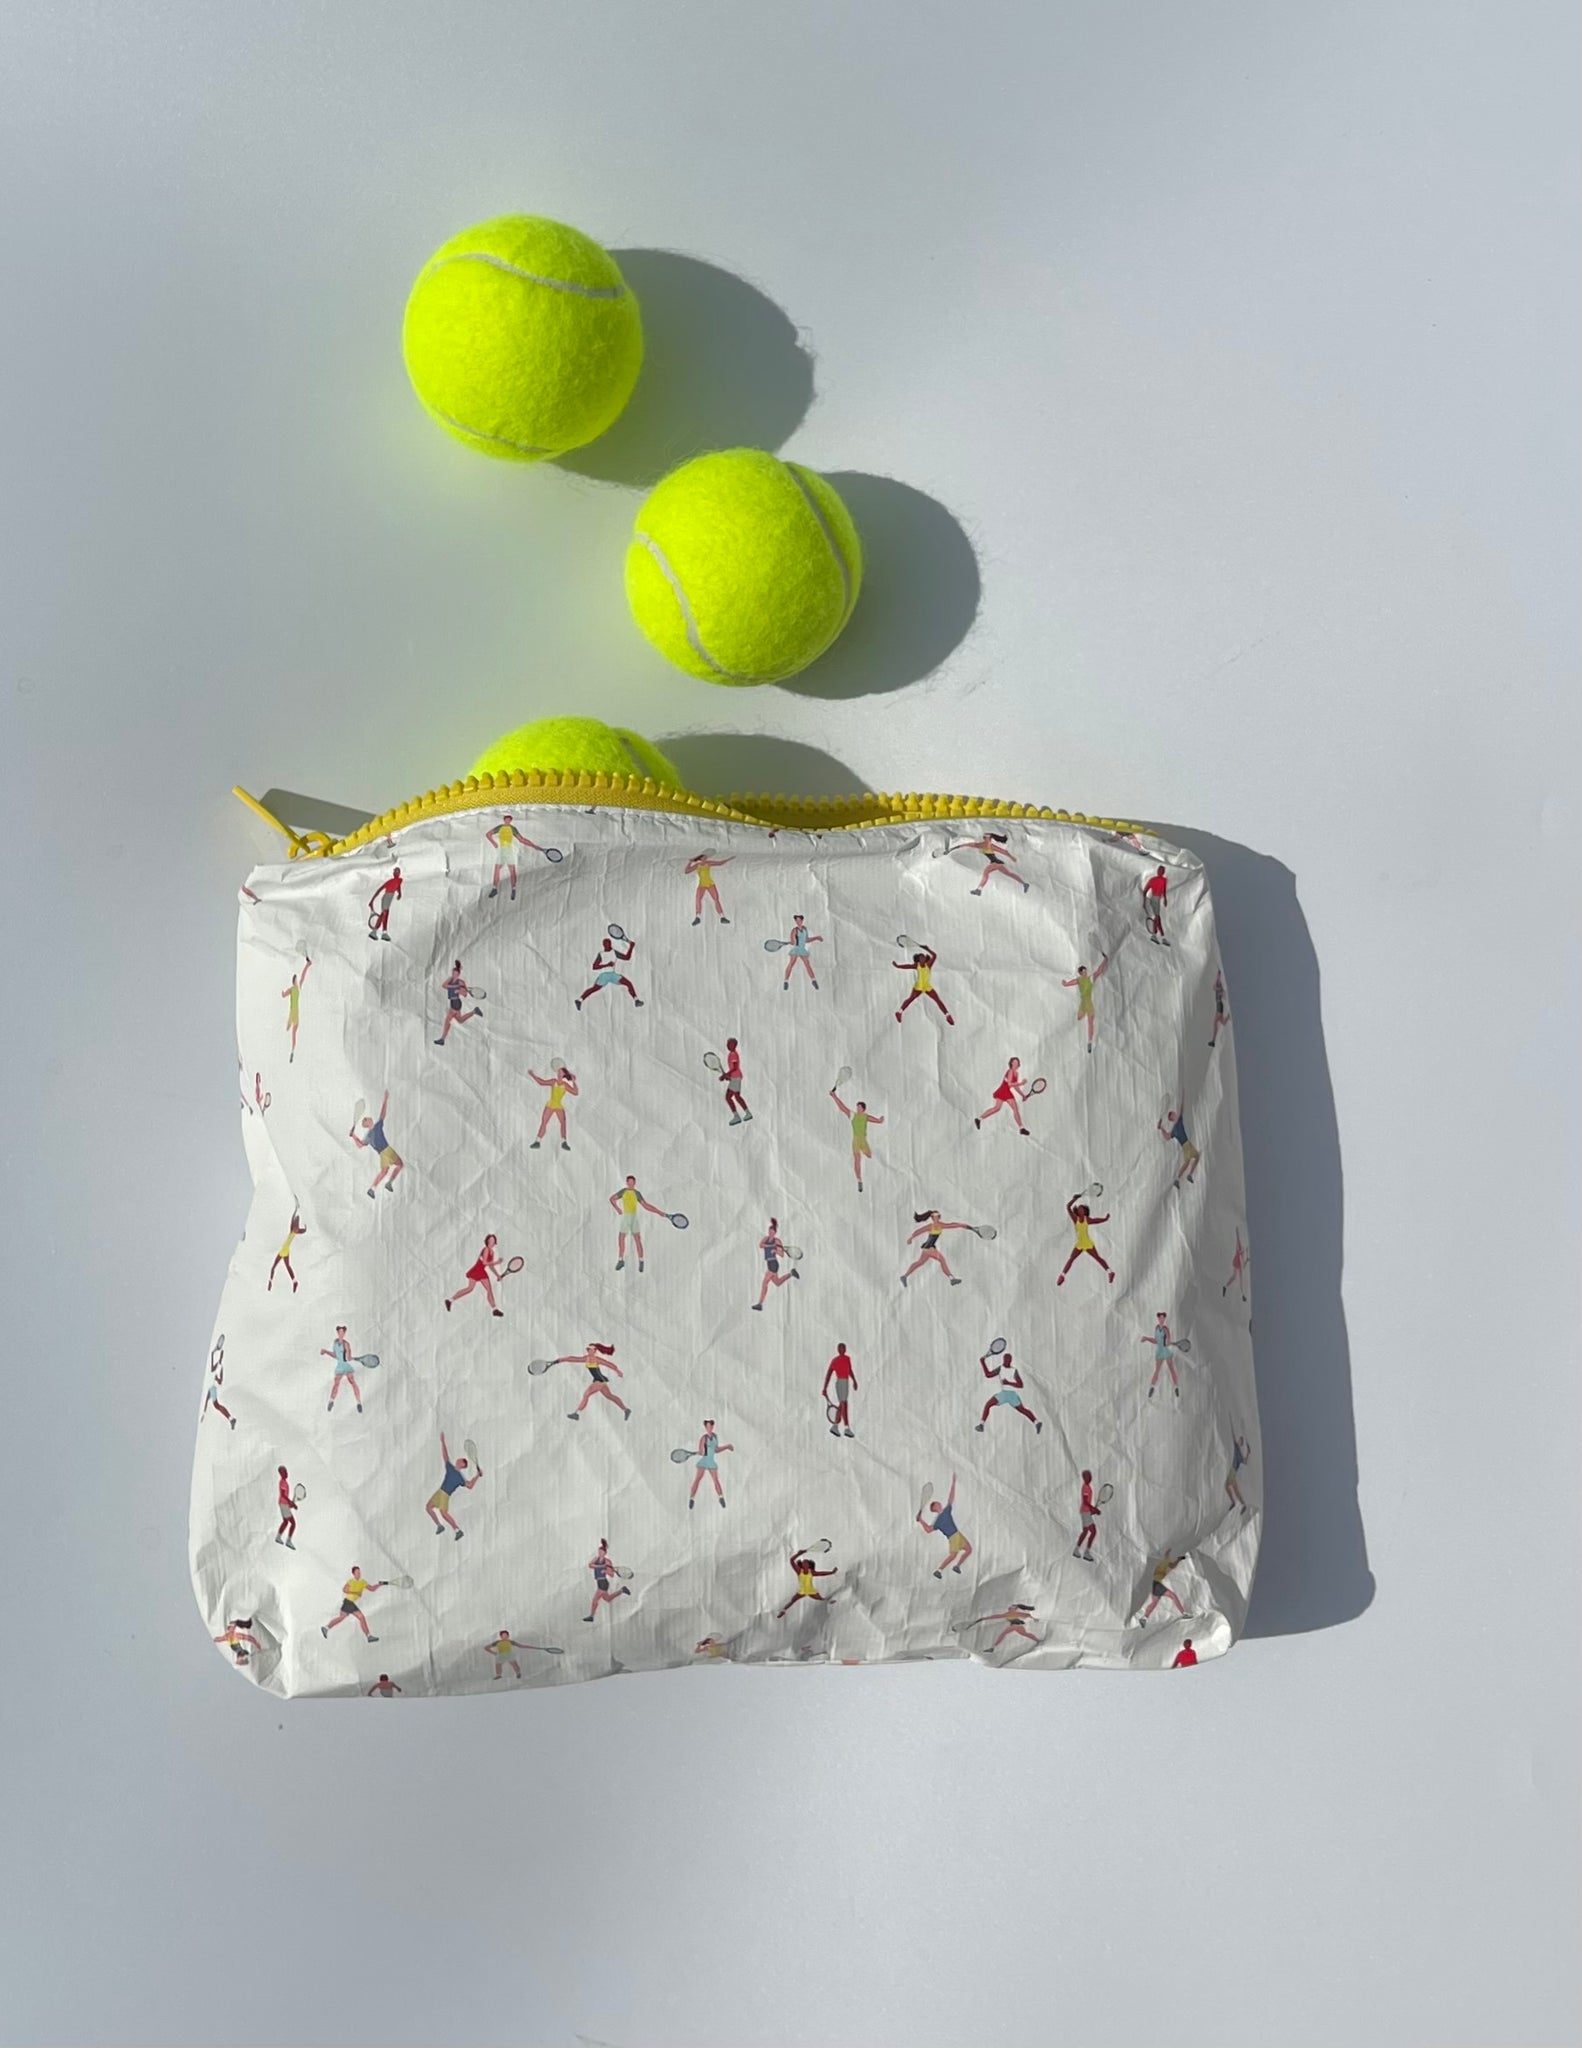 tennis organization with medium zipper pouch